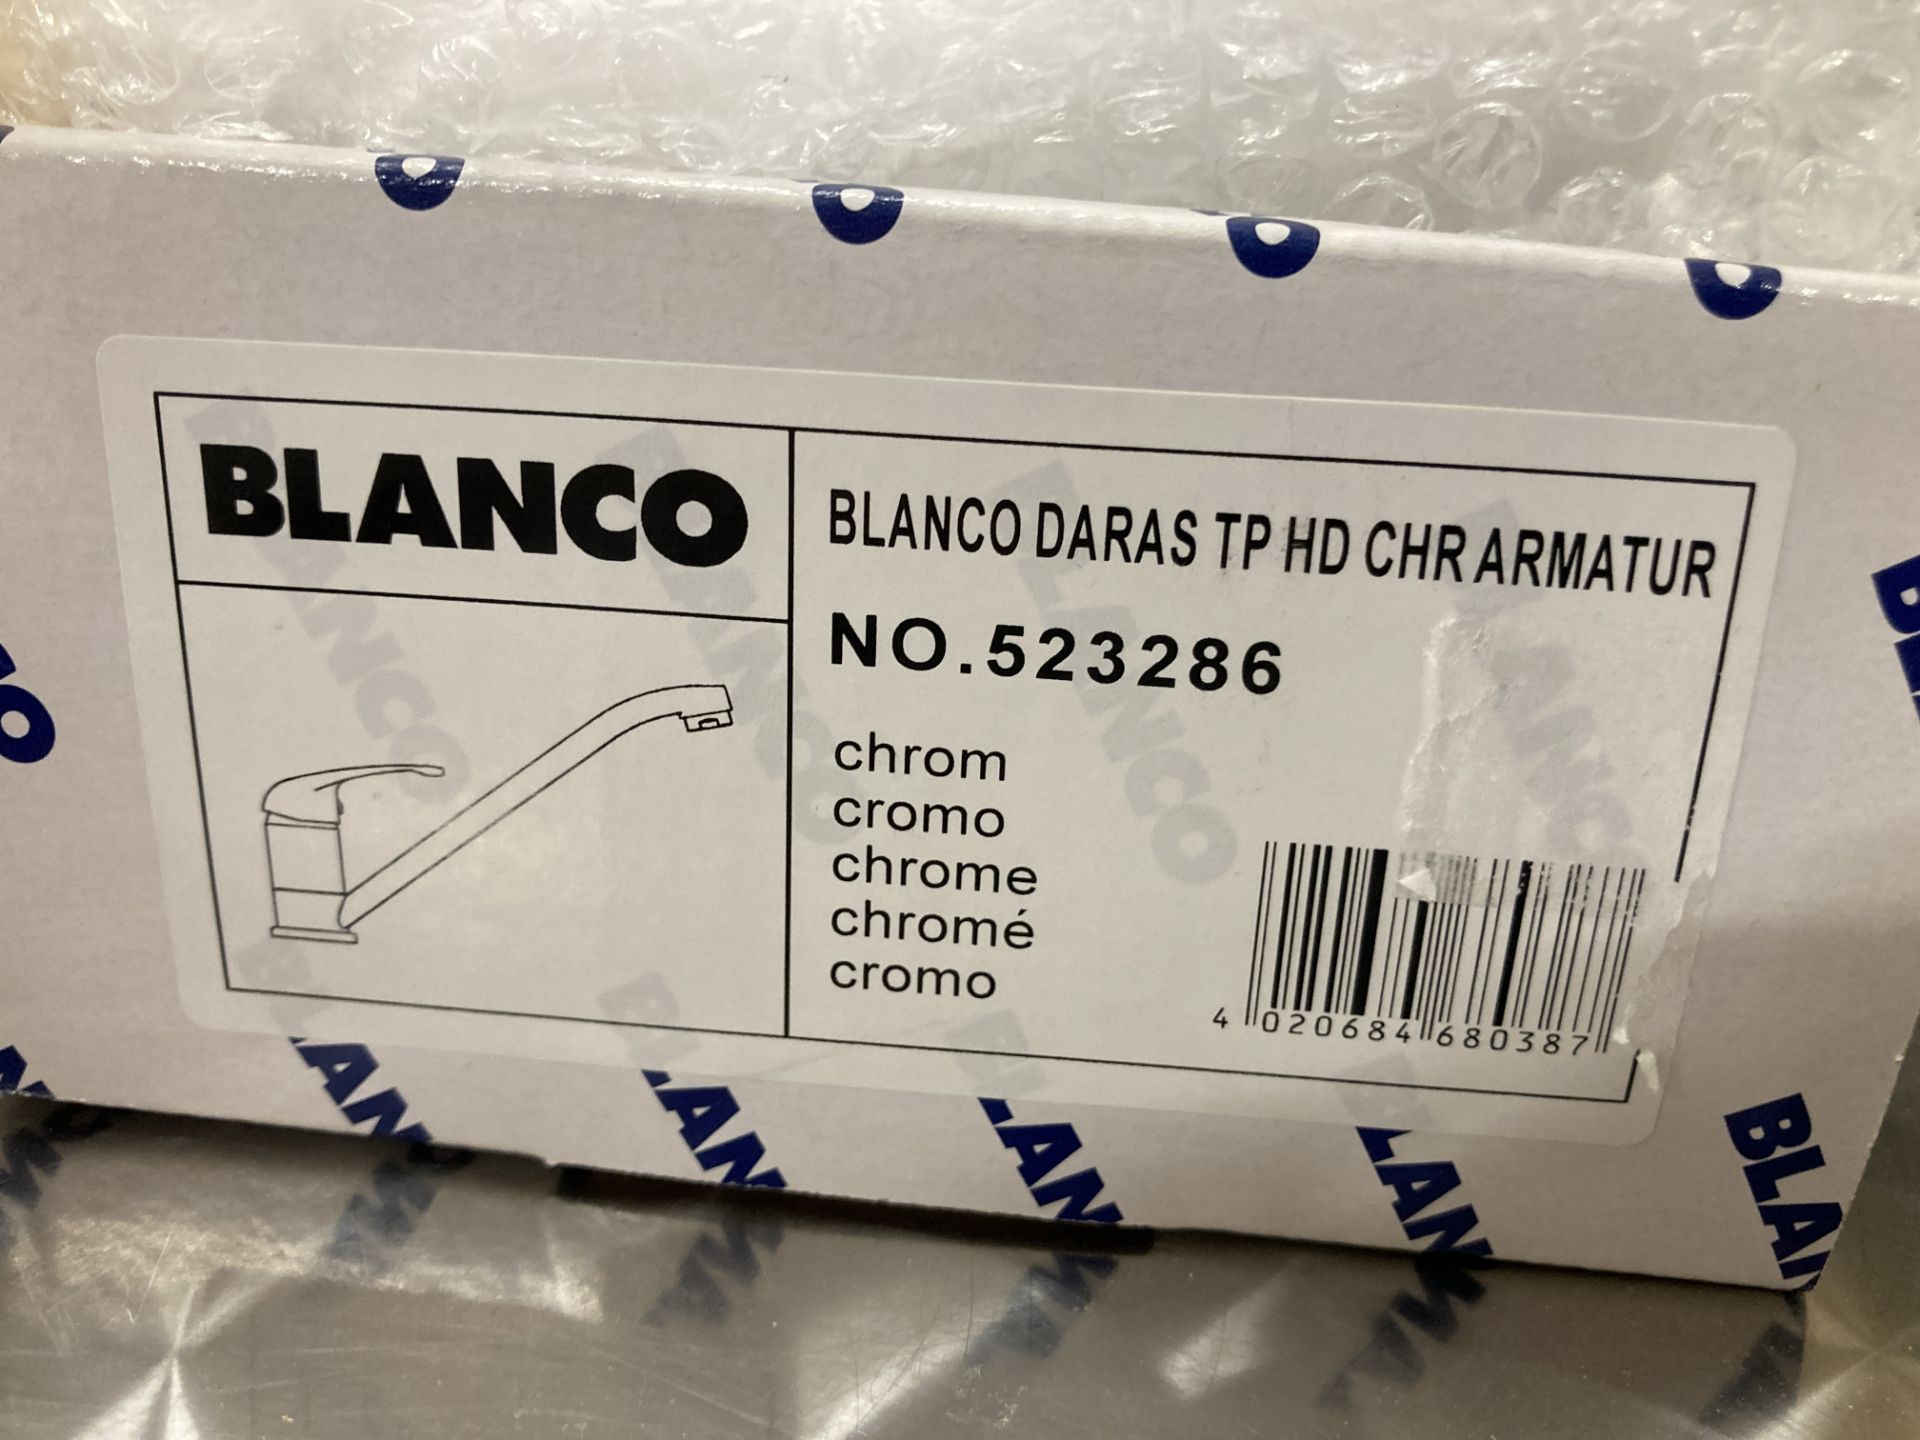 Blanco Daras TP HD CHR ARMATUR 523286 chrome finish tap - Image 4 of 4